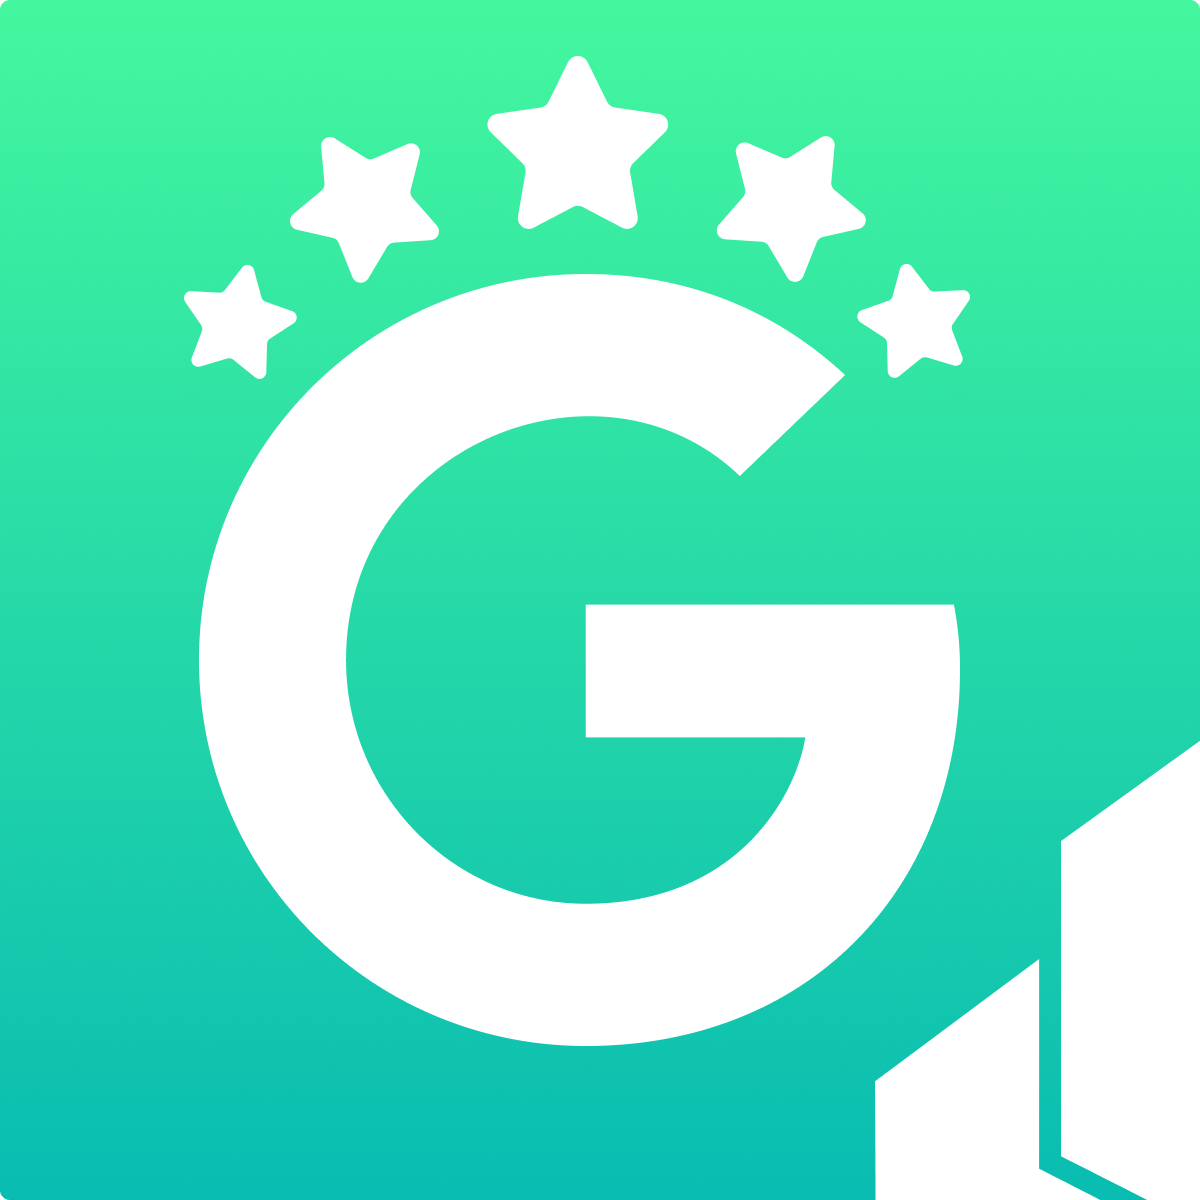 DataOver Auto Google Reviews for Shopify